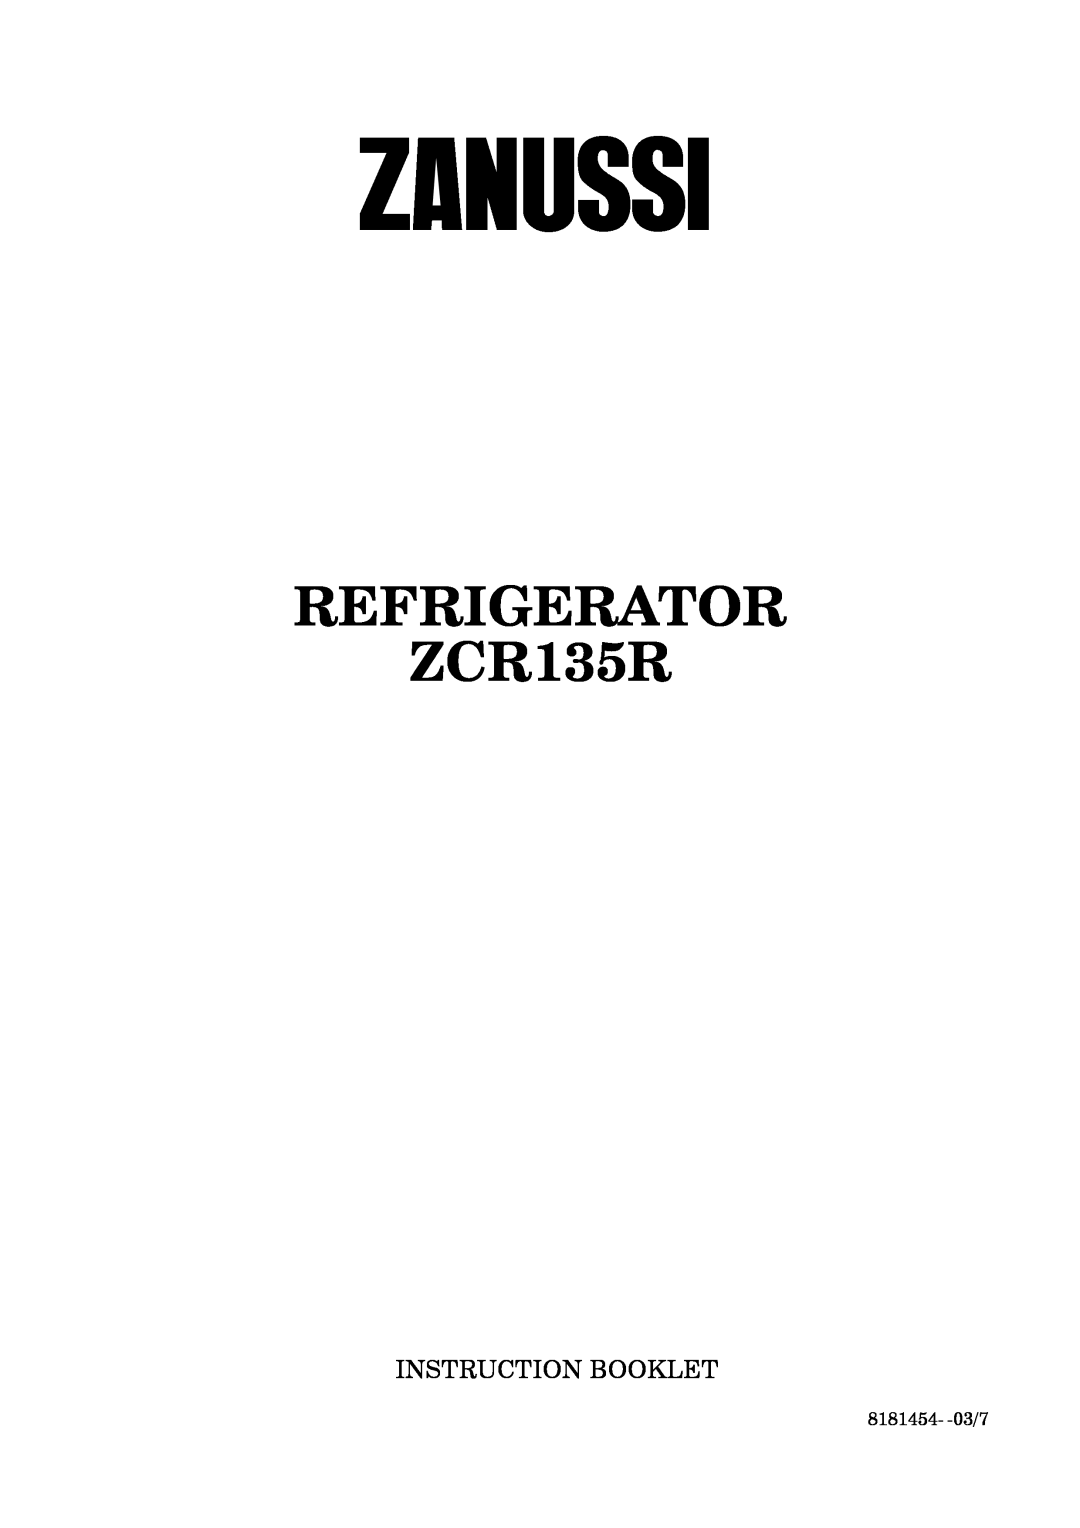 Zanussi manual REFRIGERATOR ZCR135R, Instruction Booklet 